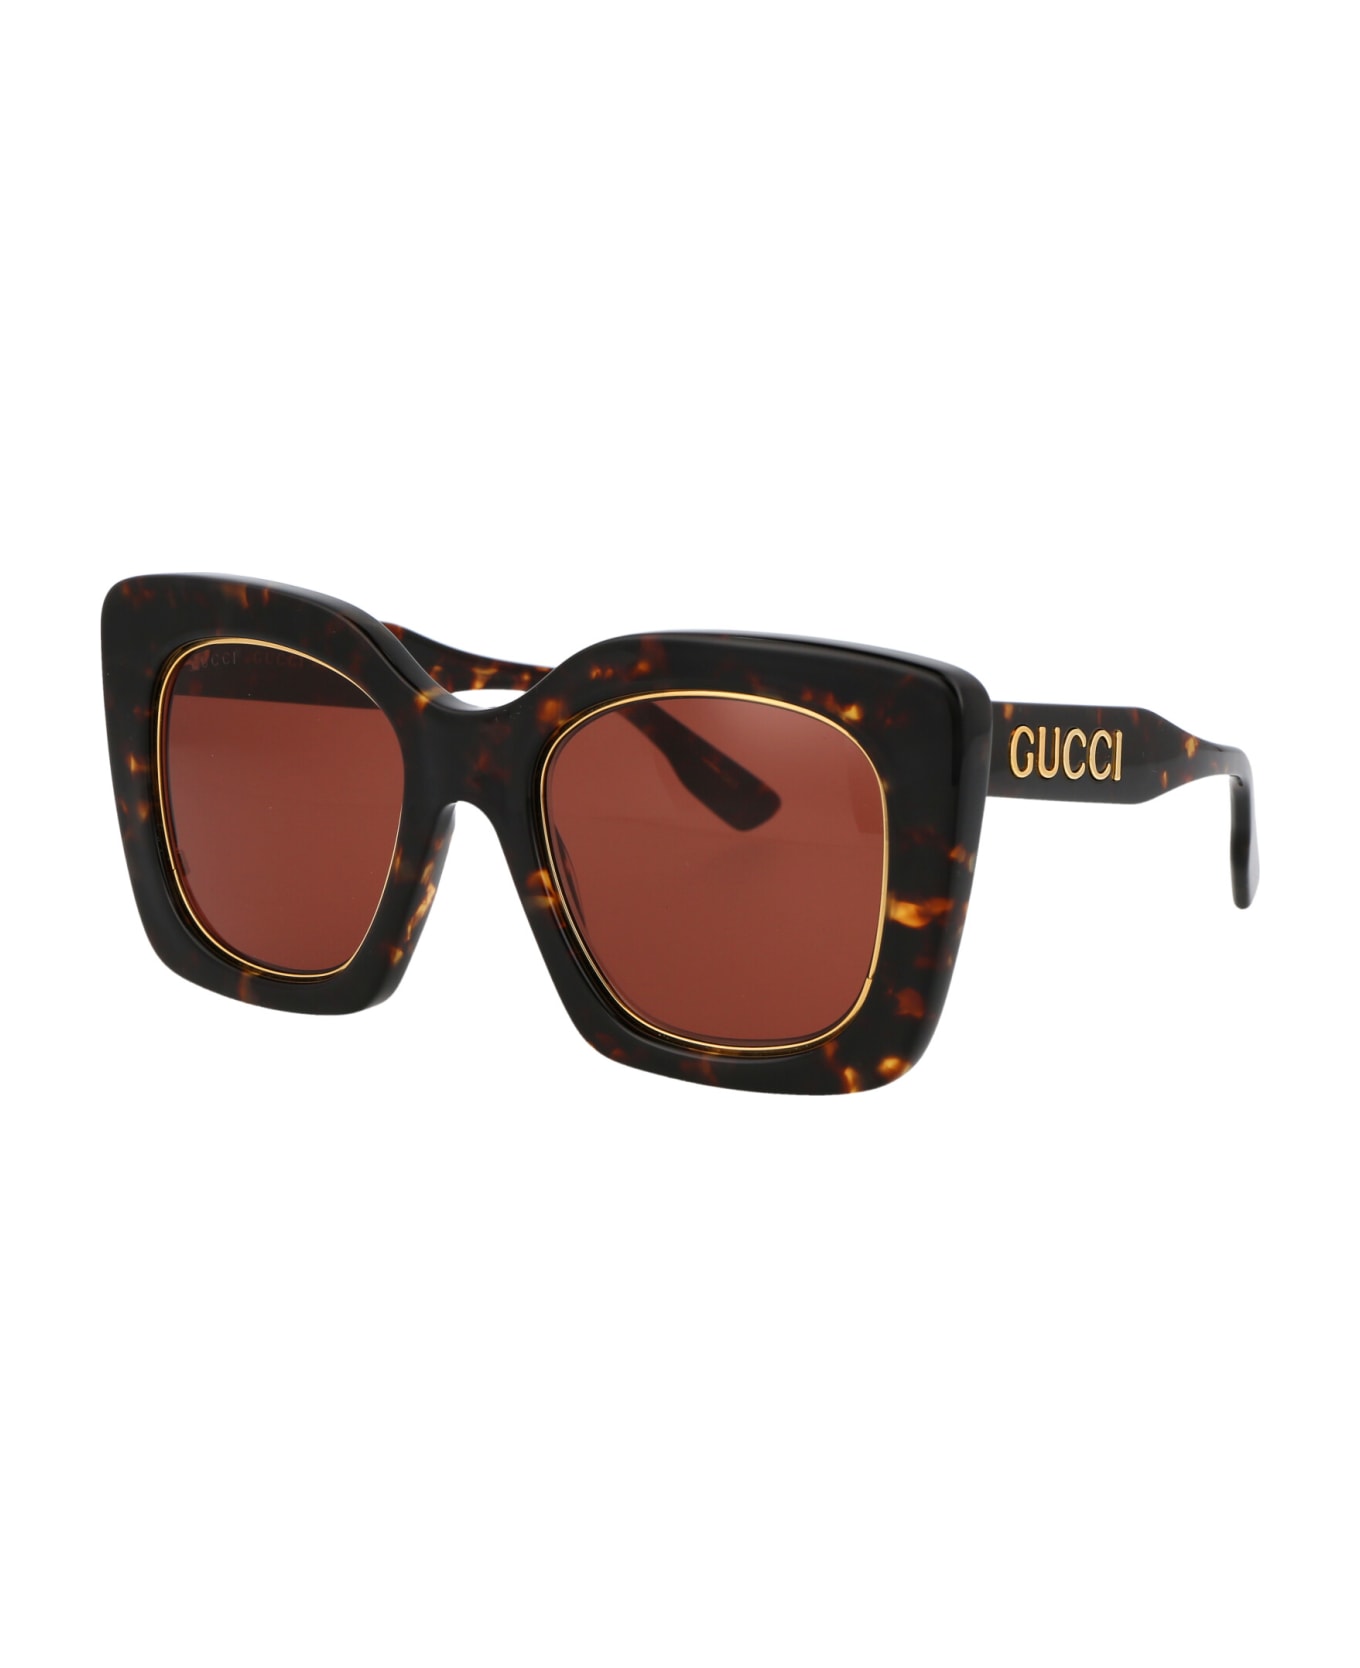 Gucci Eyewear Gg1151s Sunglasses - 003 HAVANA HAVANA BROWN サングラス